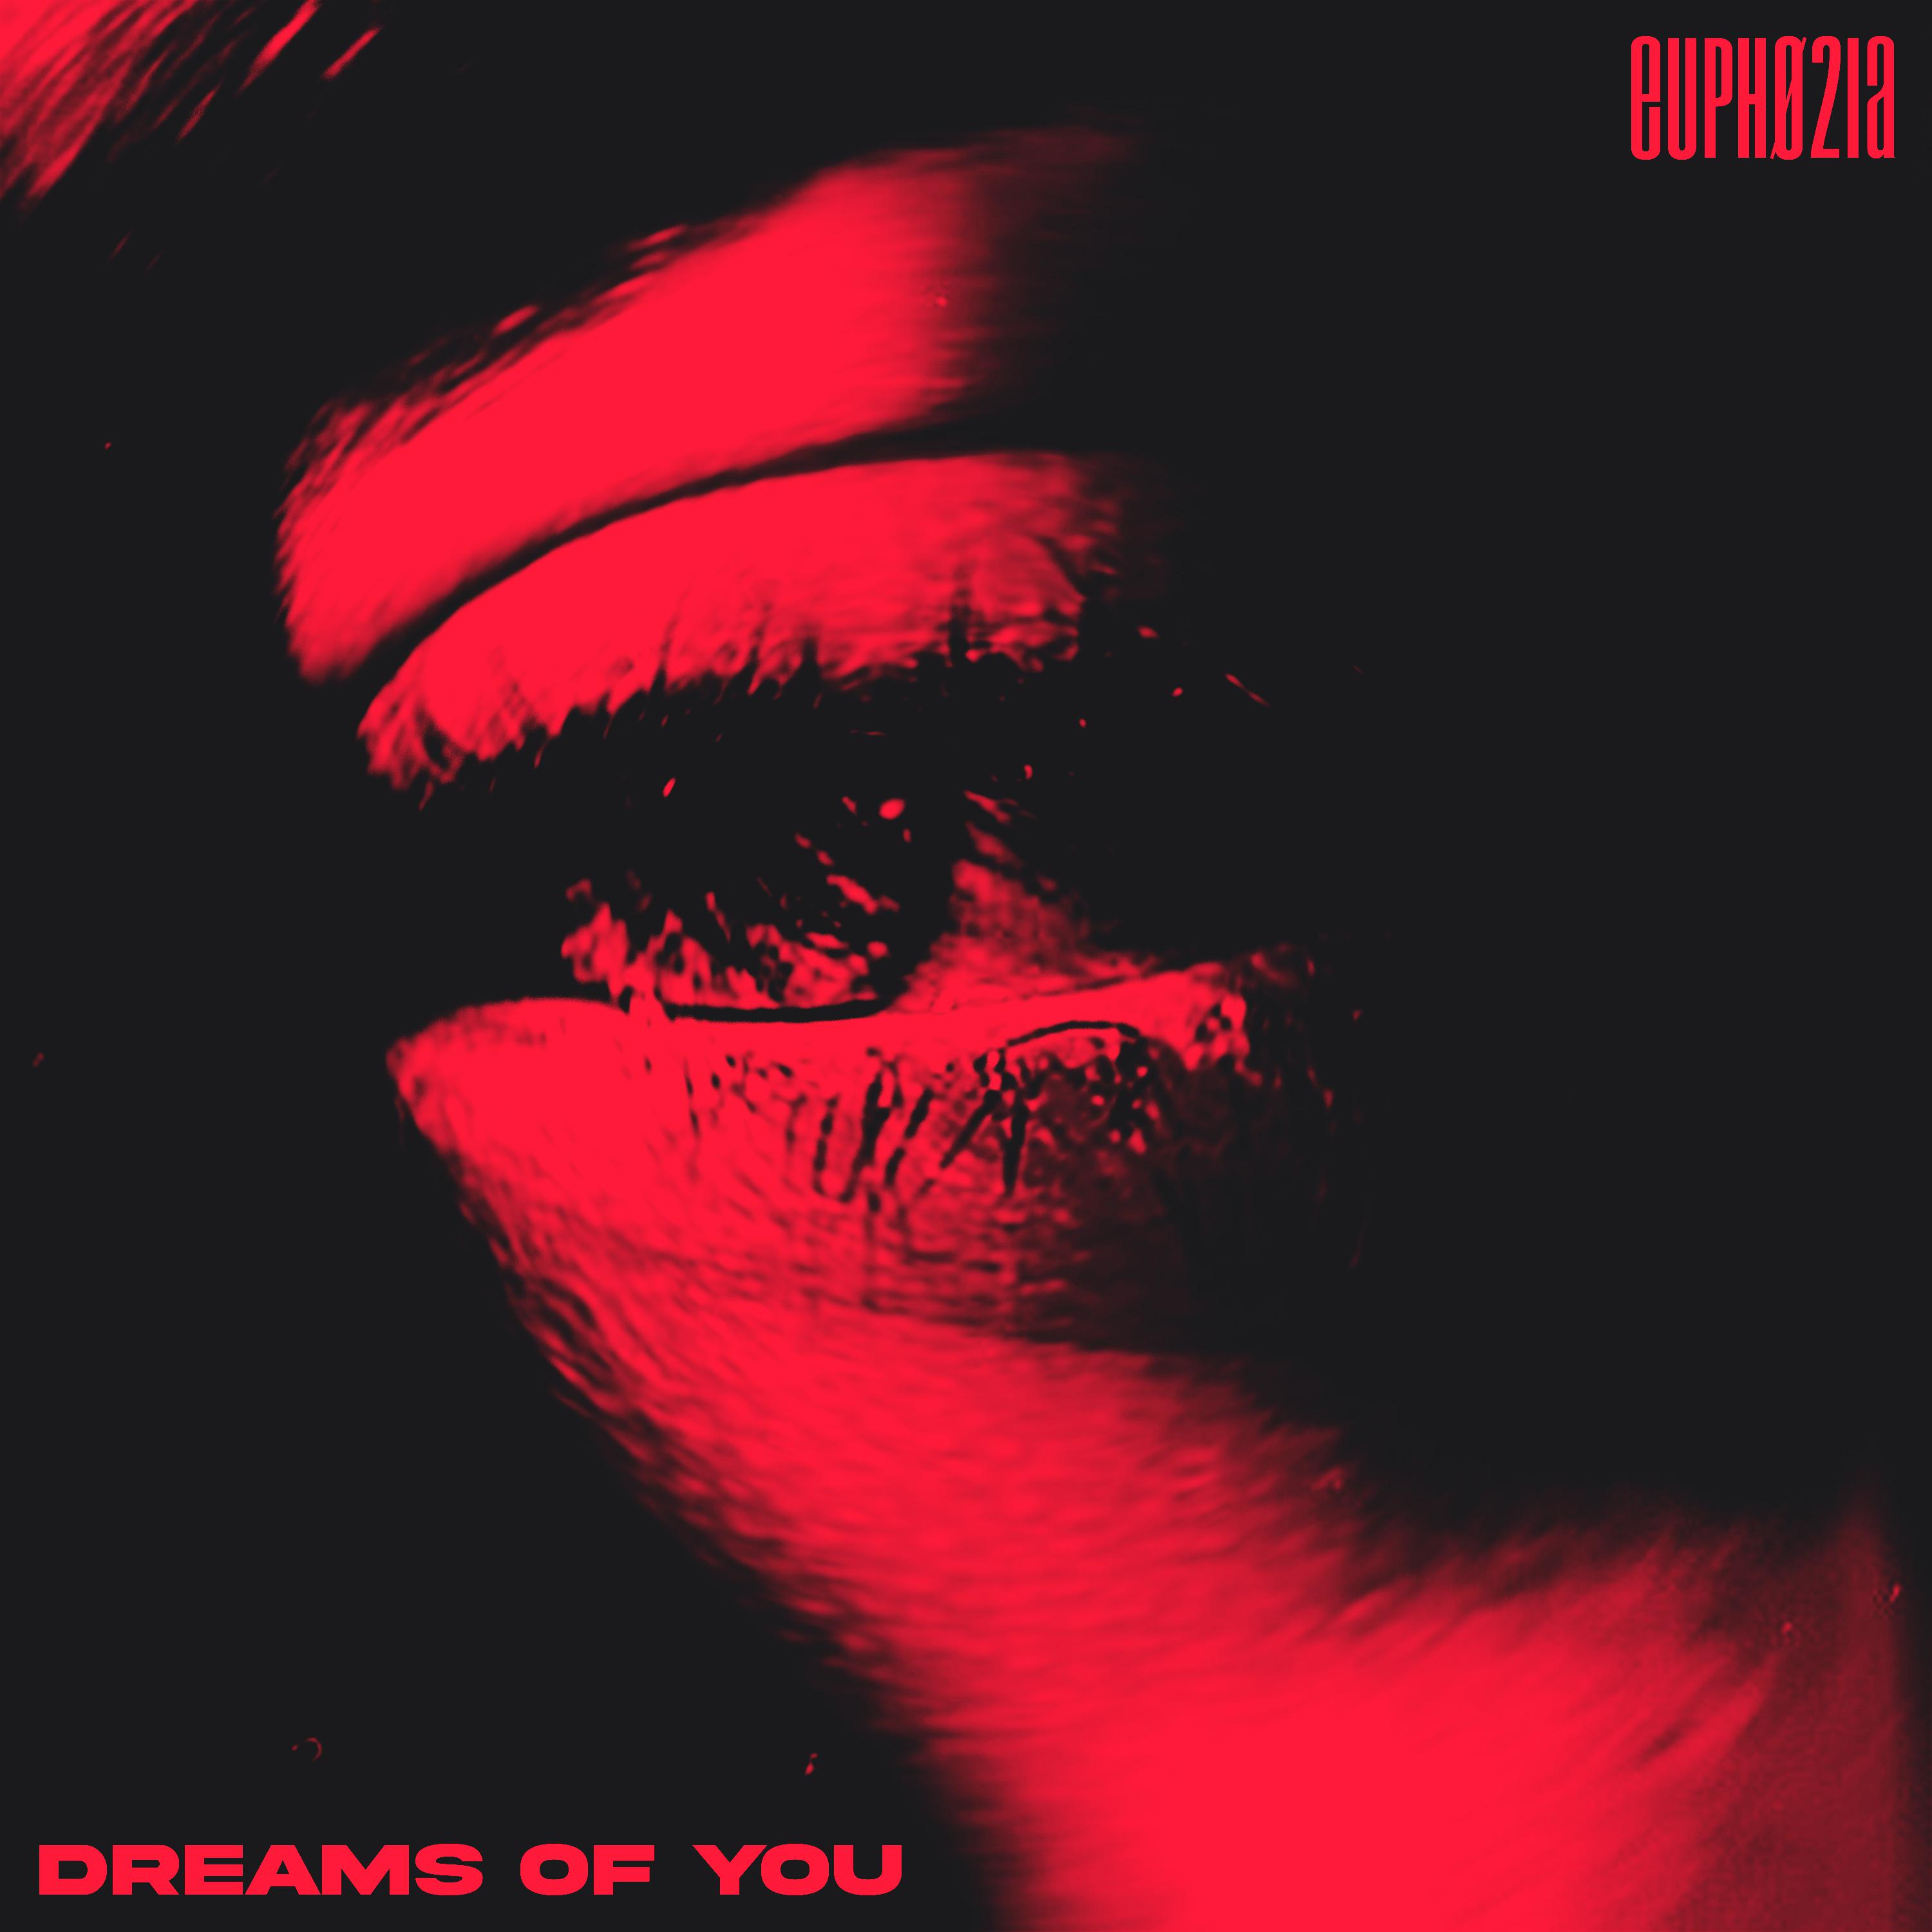 EUPHØ2iA - DREAMS OF YOU